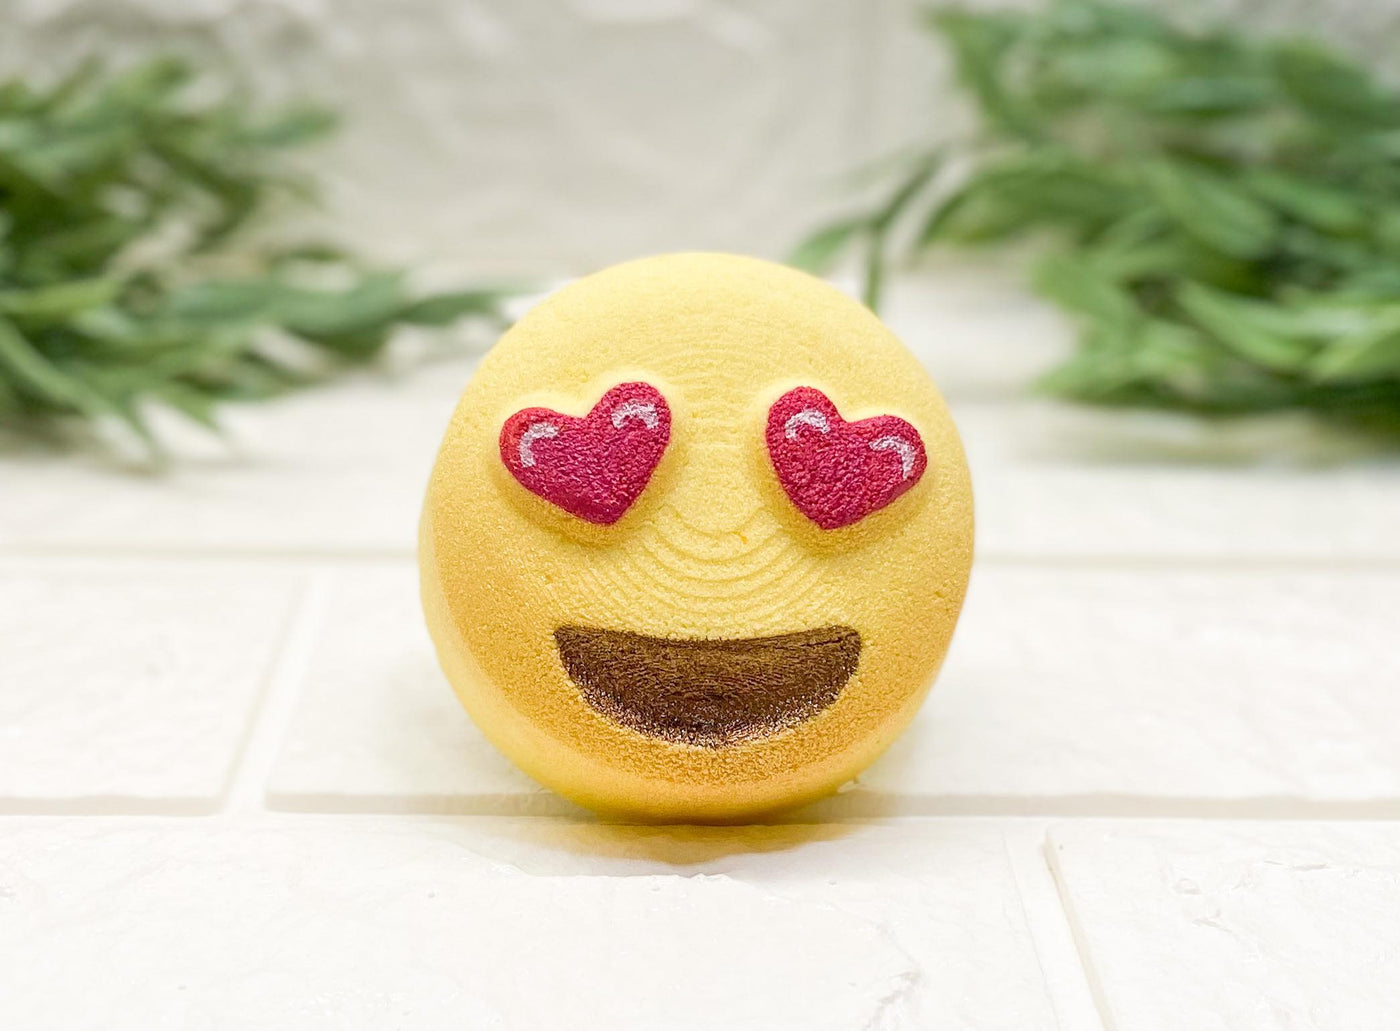 HYBRID Smiling Face with Heart-Eyes Emoji Bath Bomb Mold